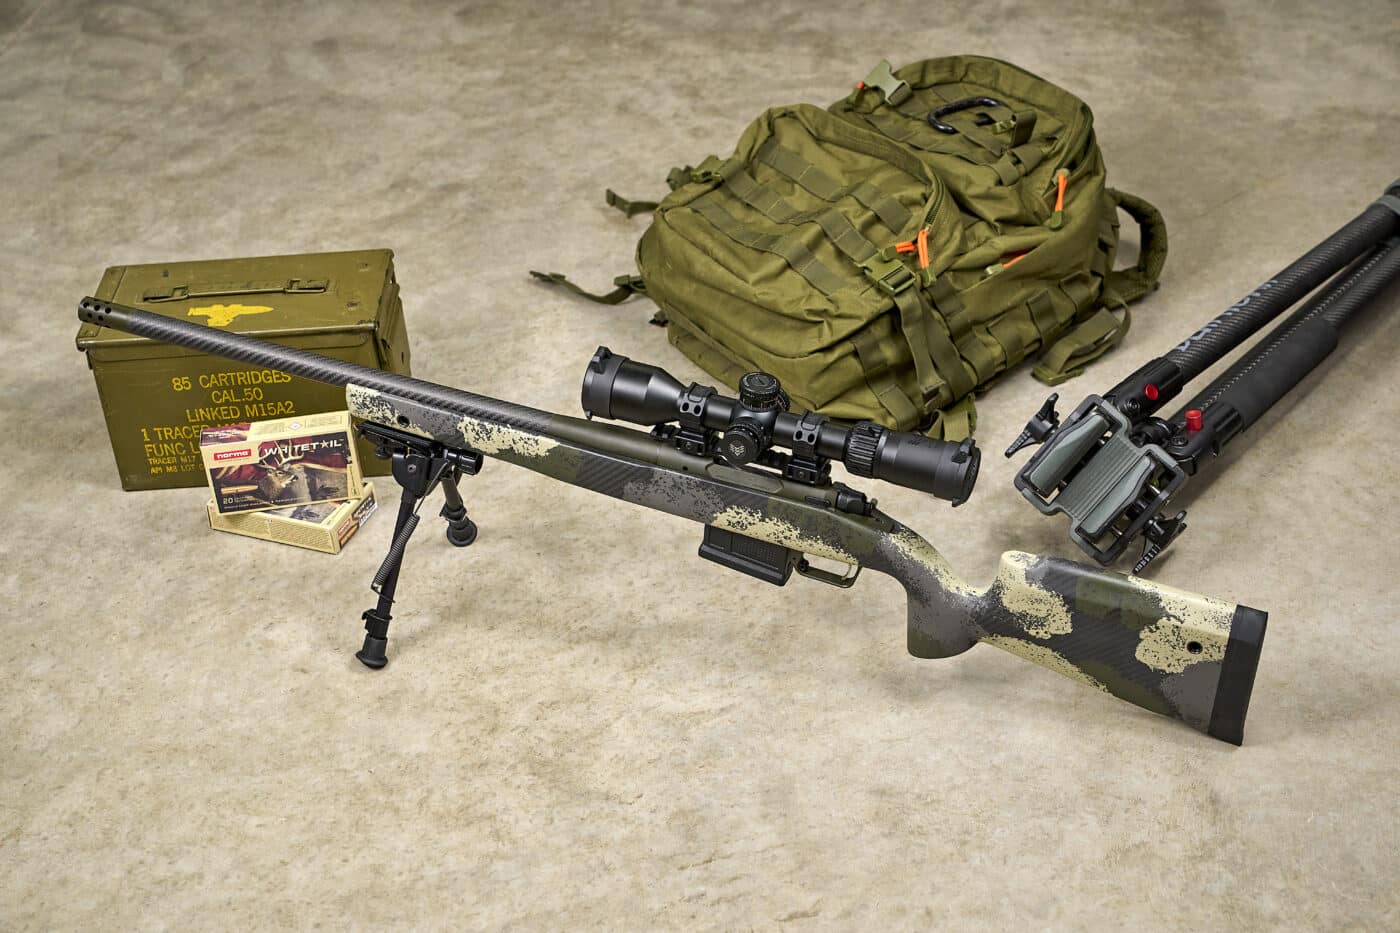 Swampfox Kentucky Long scope mounted on a Springfield Armory Waypoint 2020 rifle